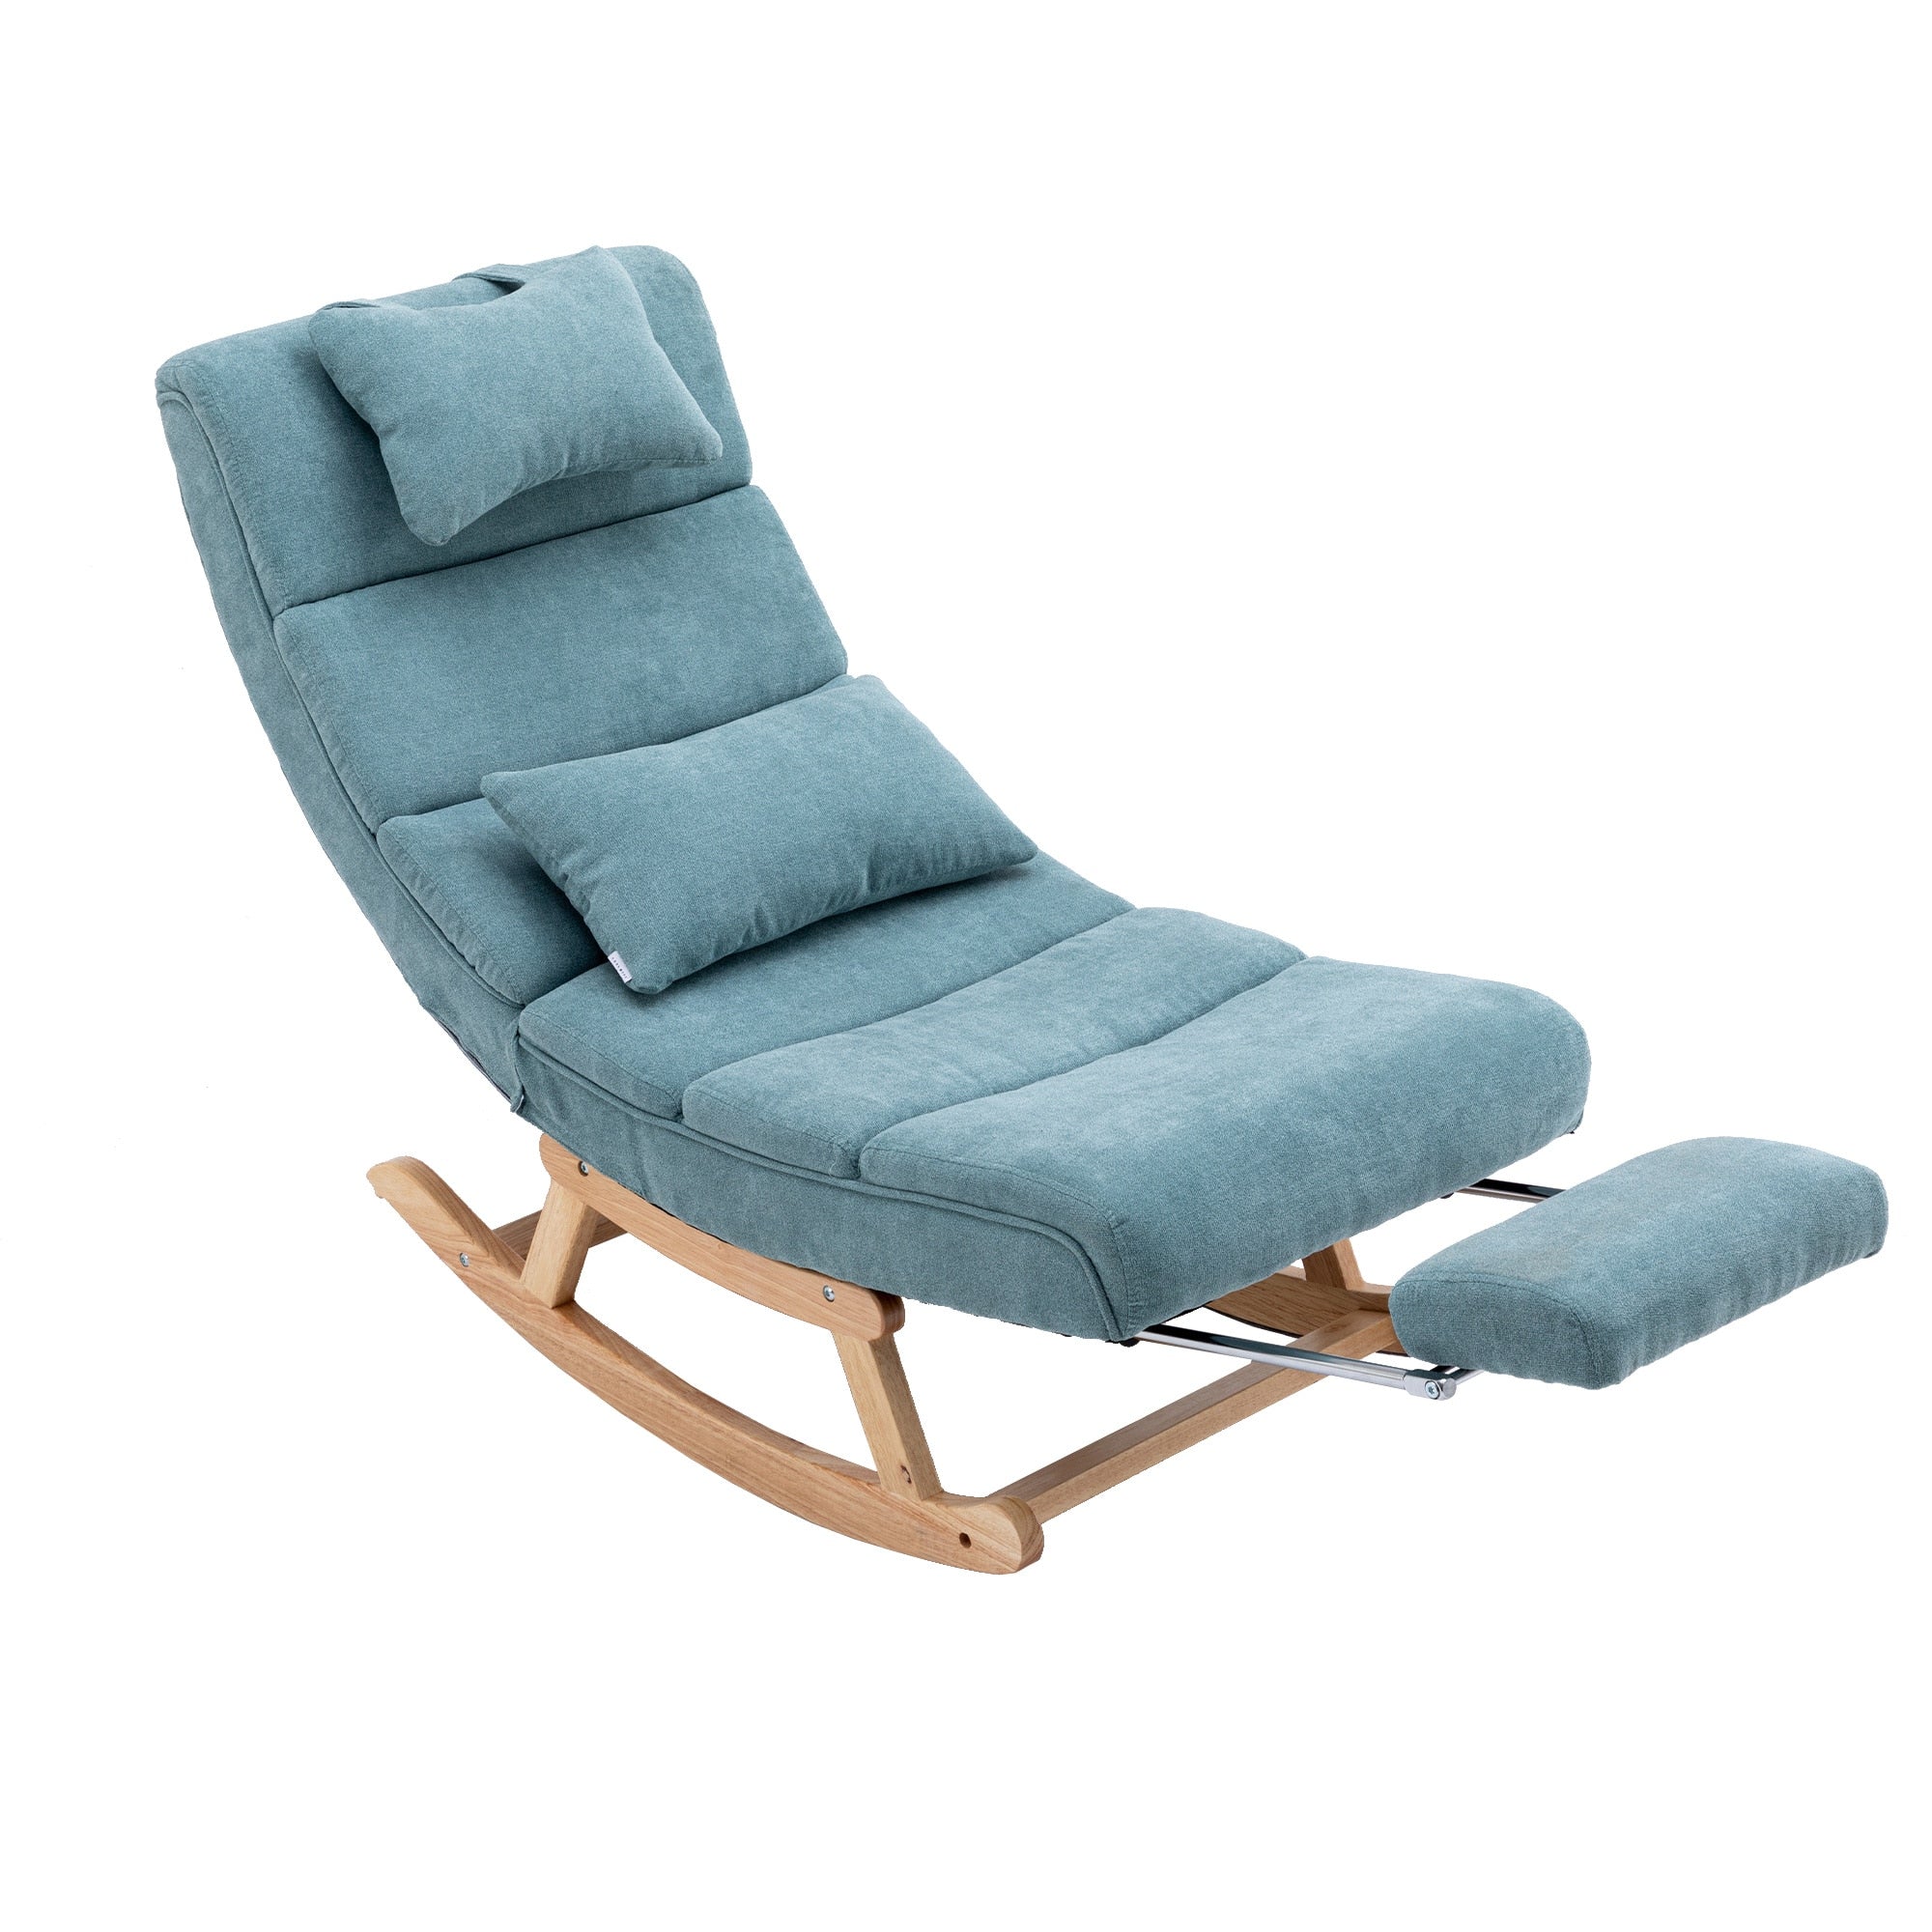 Homio Decor Living Room Light Blue / United States Modern Mid-Century Rocking Chair